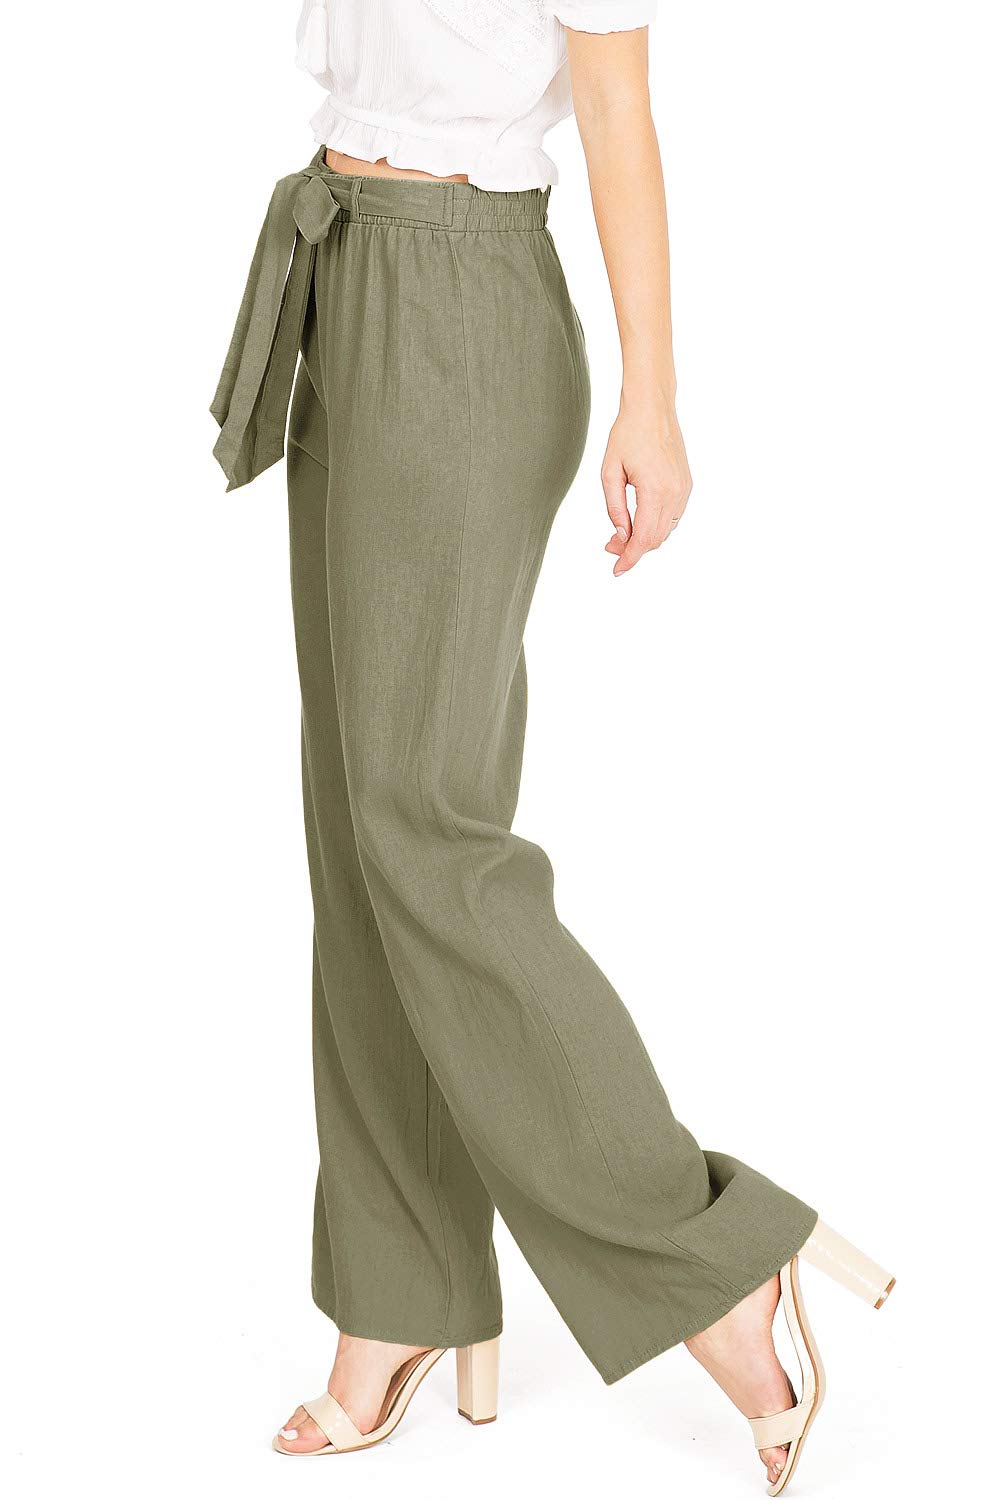 Ambiance Women's Juniors Wide Leg Spring Linen Pants (Olive, Small) -  Walmart.com